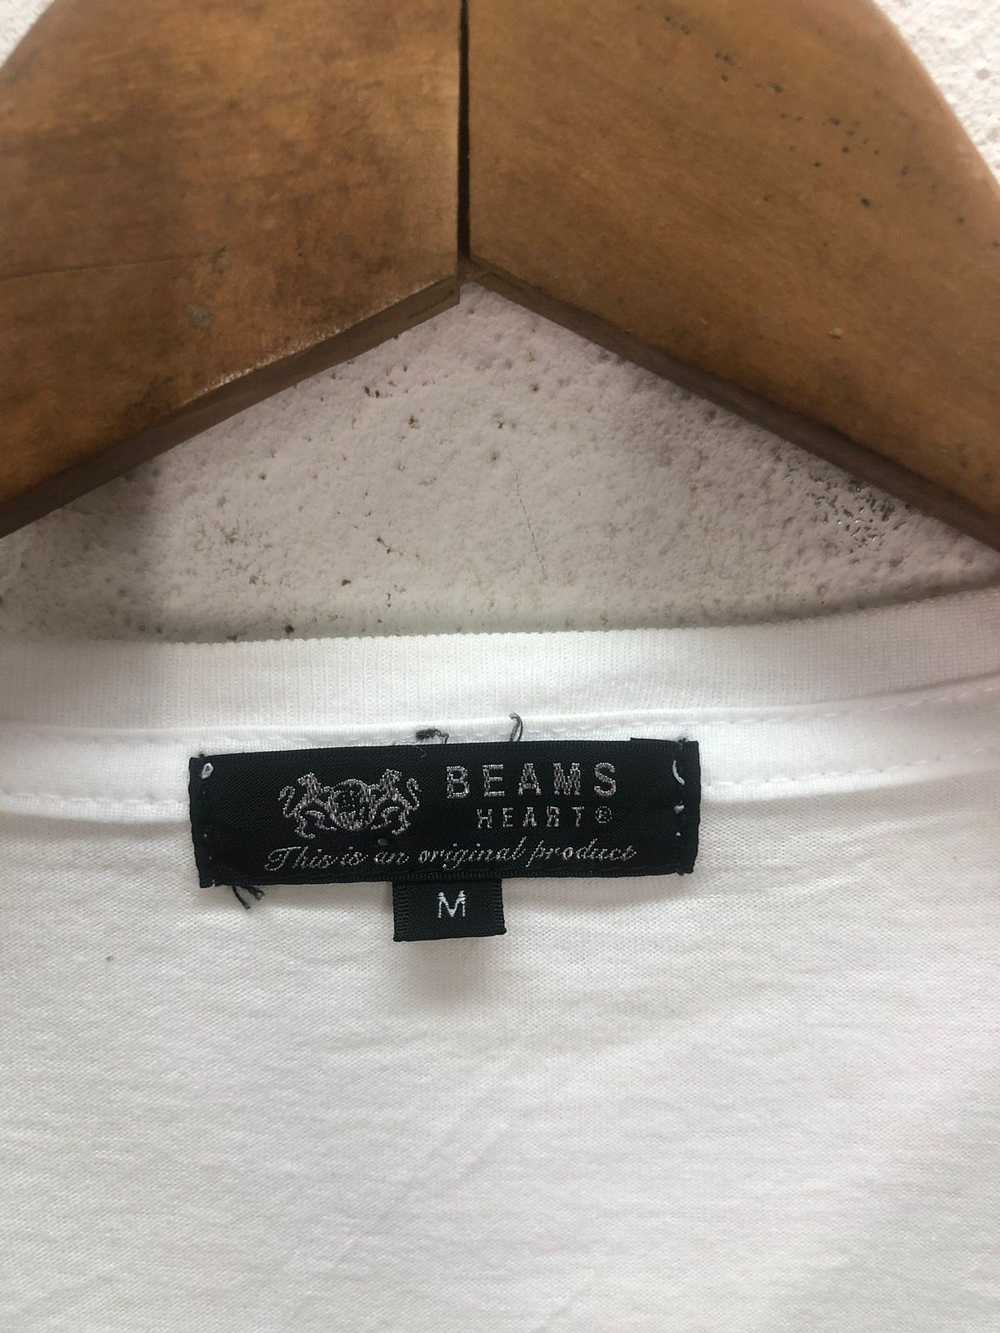 Beams Plus Beams Heart Have a Nice Day t shirt - image 7